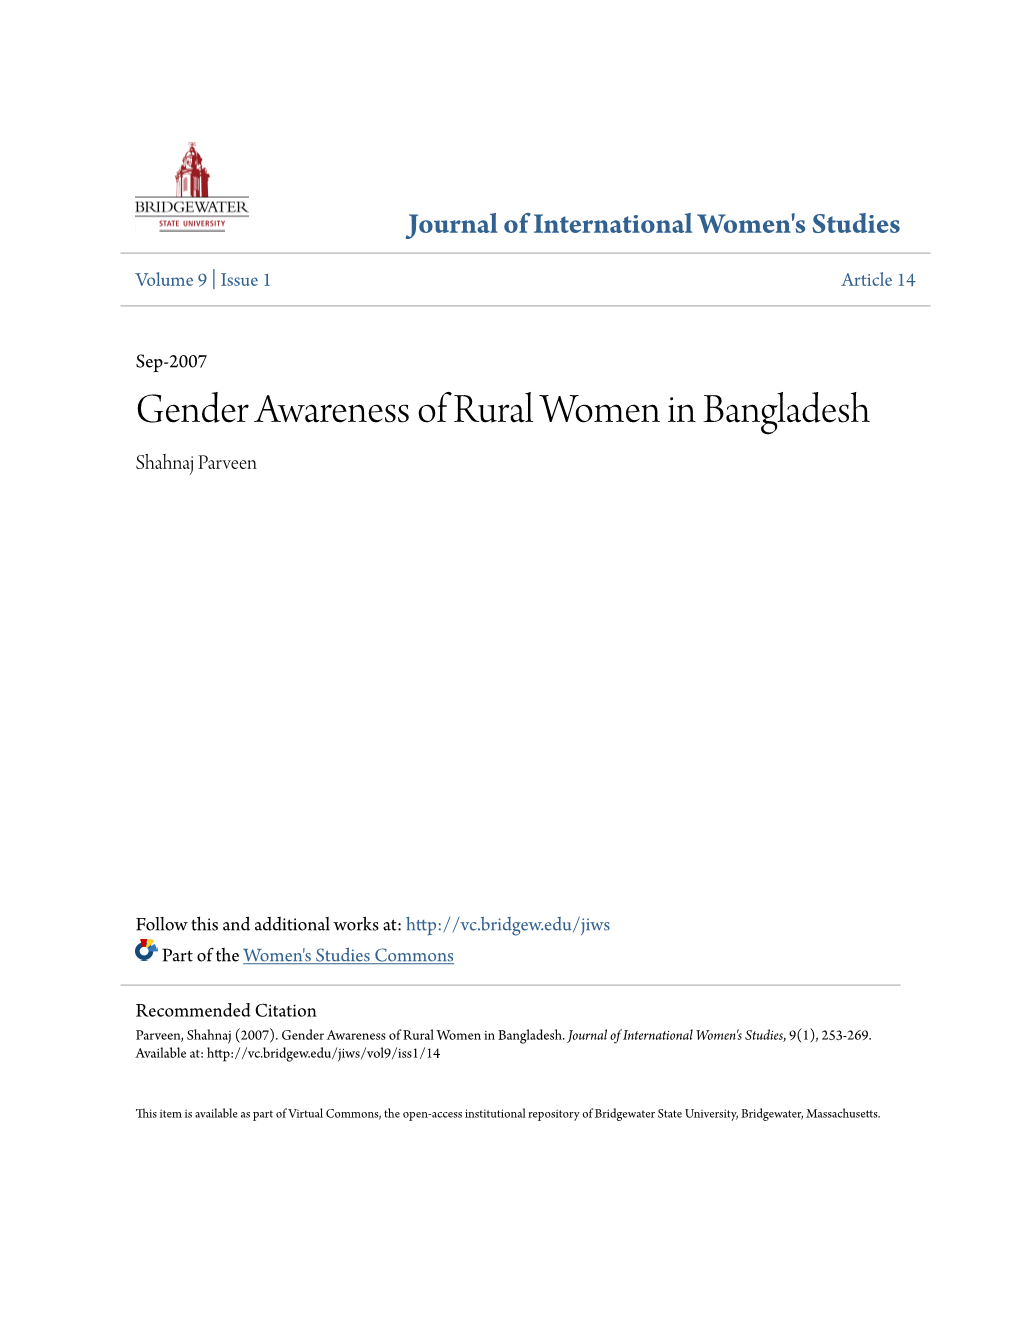 Gender Awareness of Rural Women in Bangladesh Shahnaj Parveen